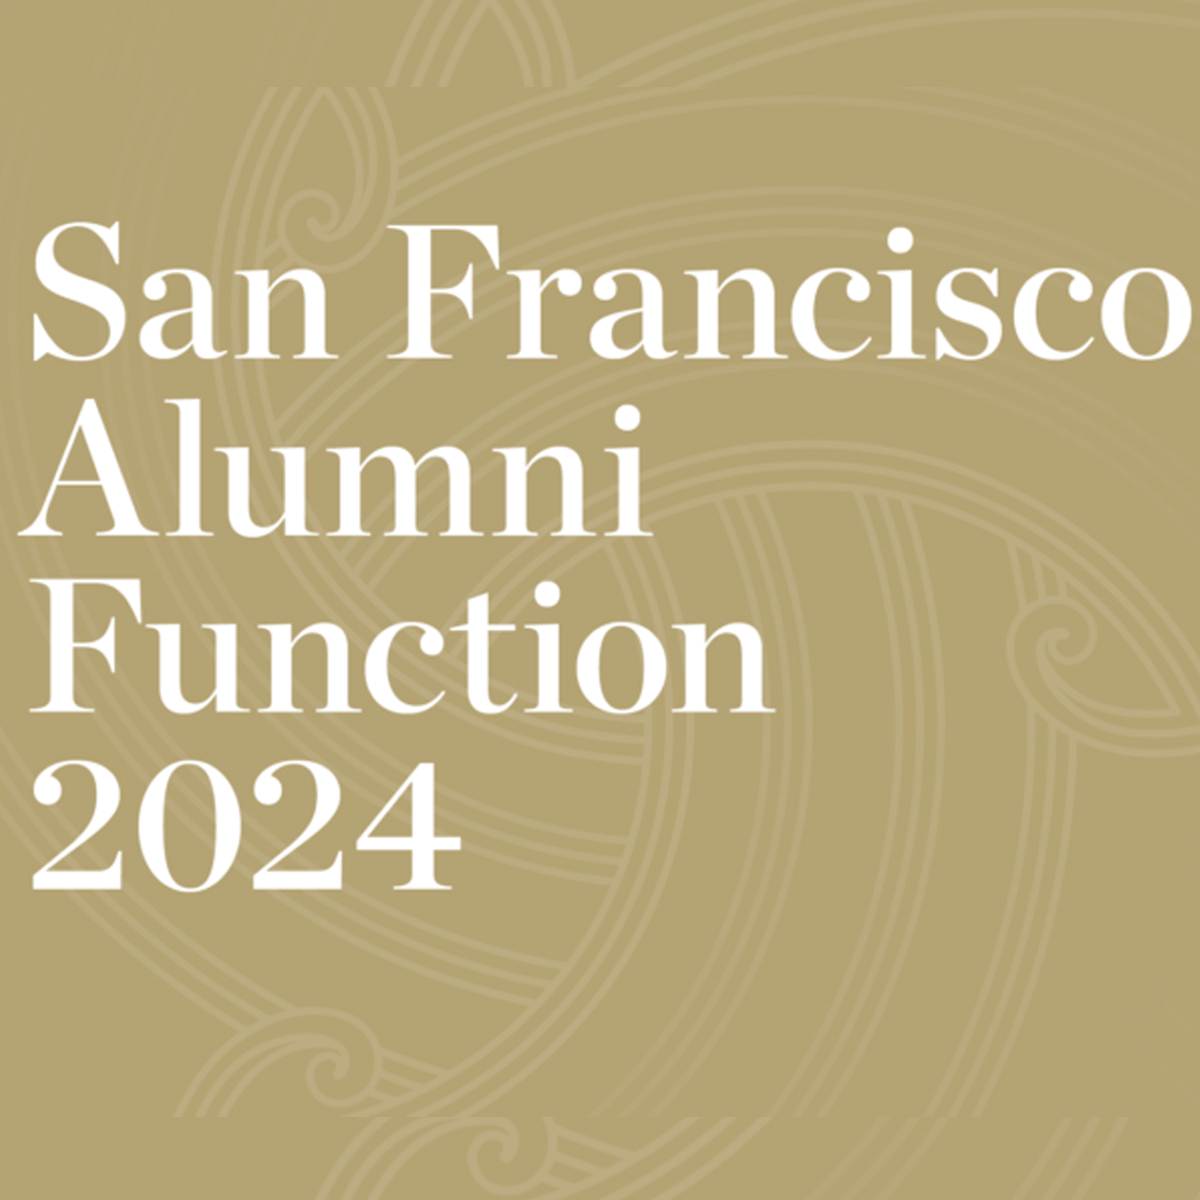 UC Alumni Function in San Francisco